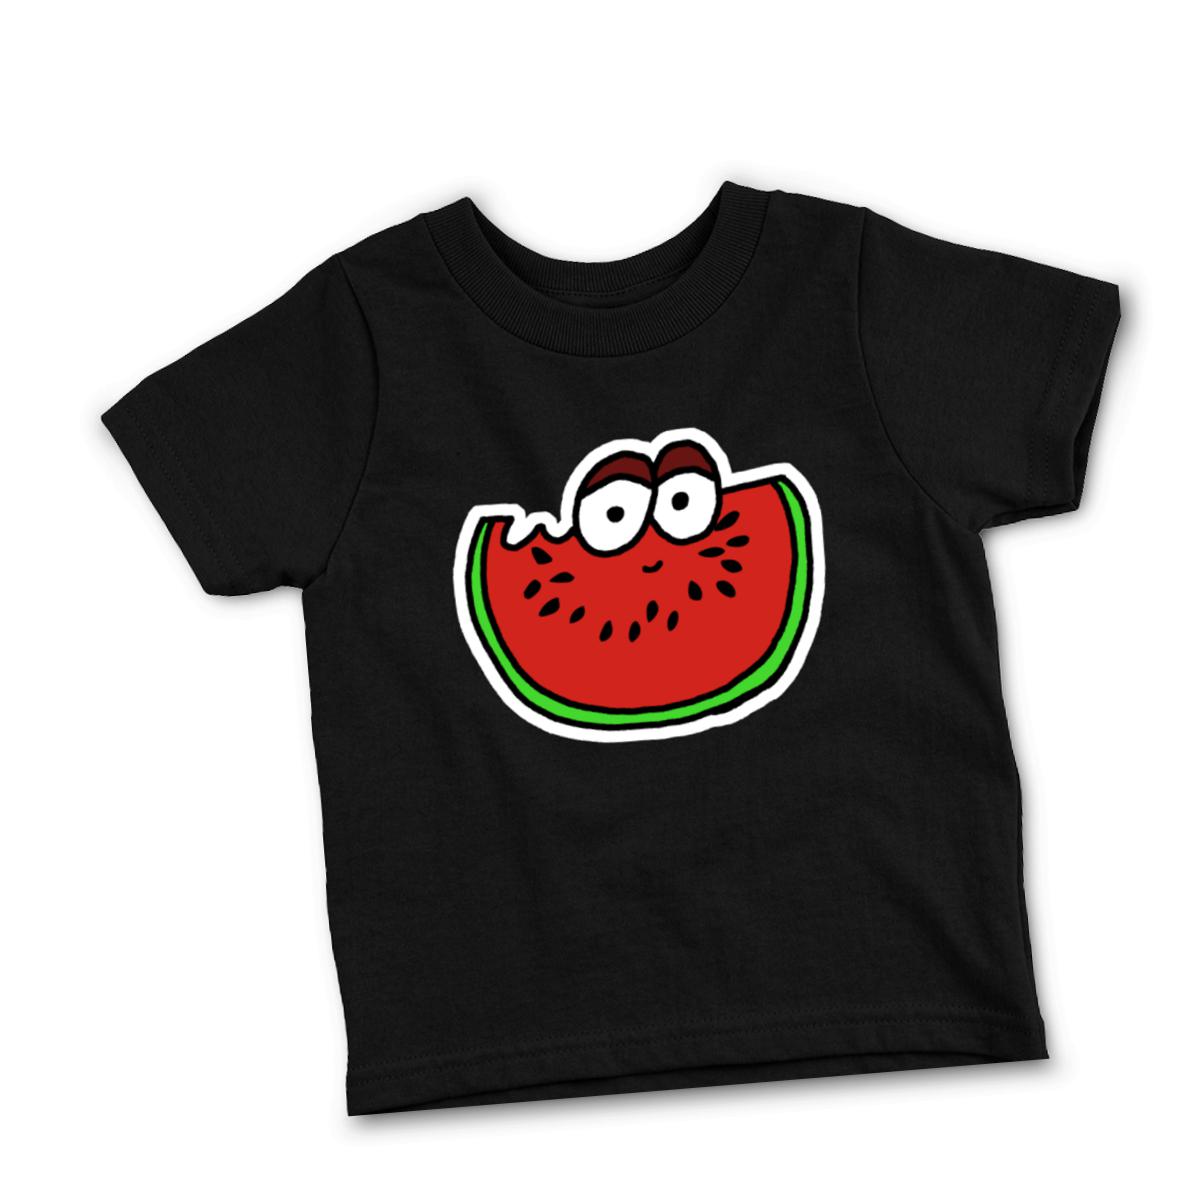 Watermelon Toddler Tee 2T black